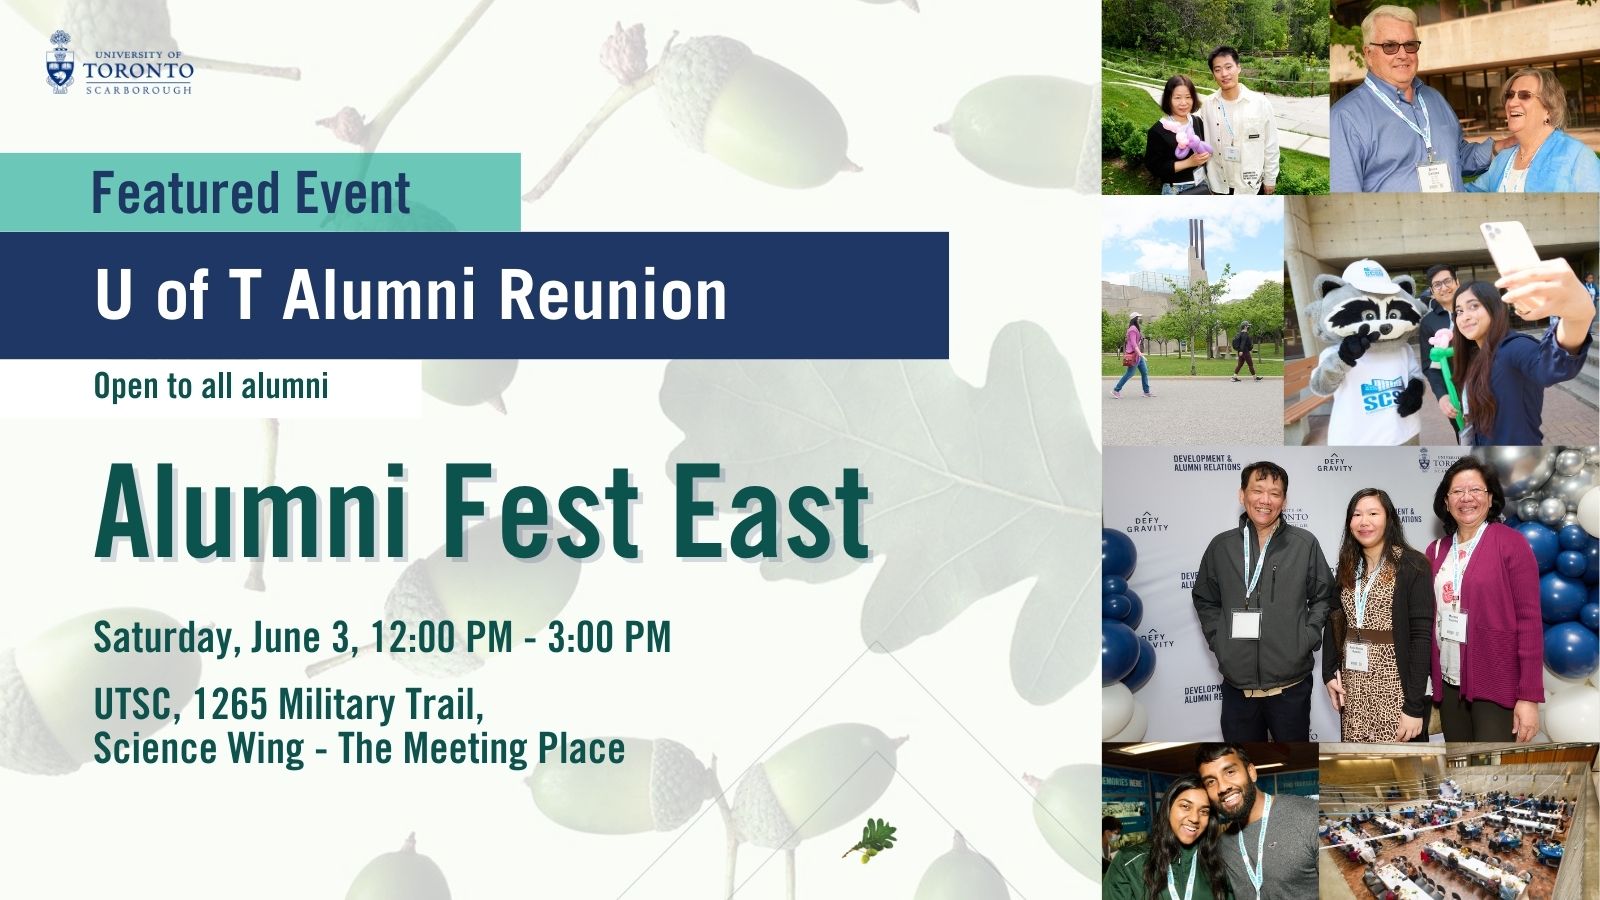 Alumni fest east featuring pictures of UTSC alumni